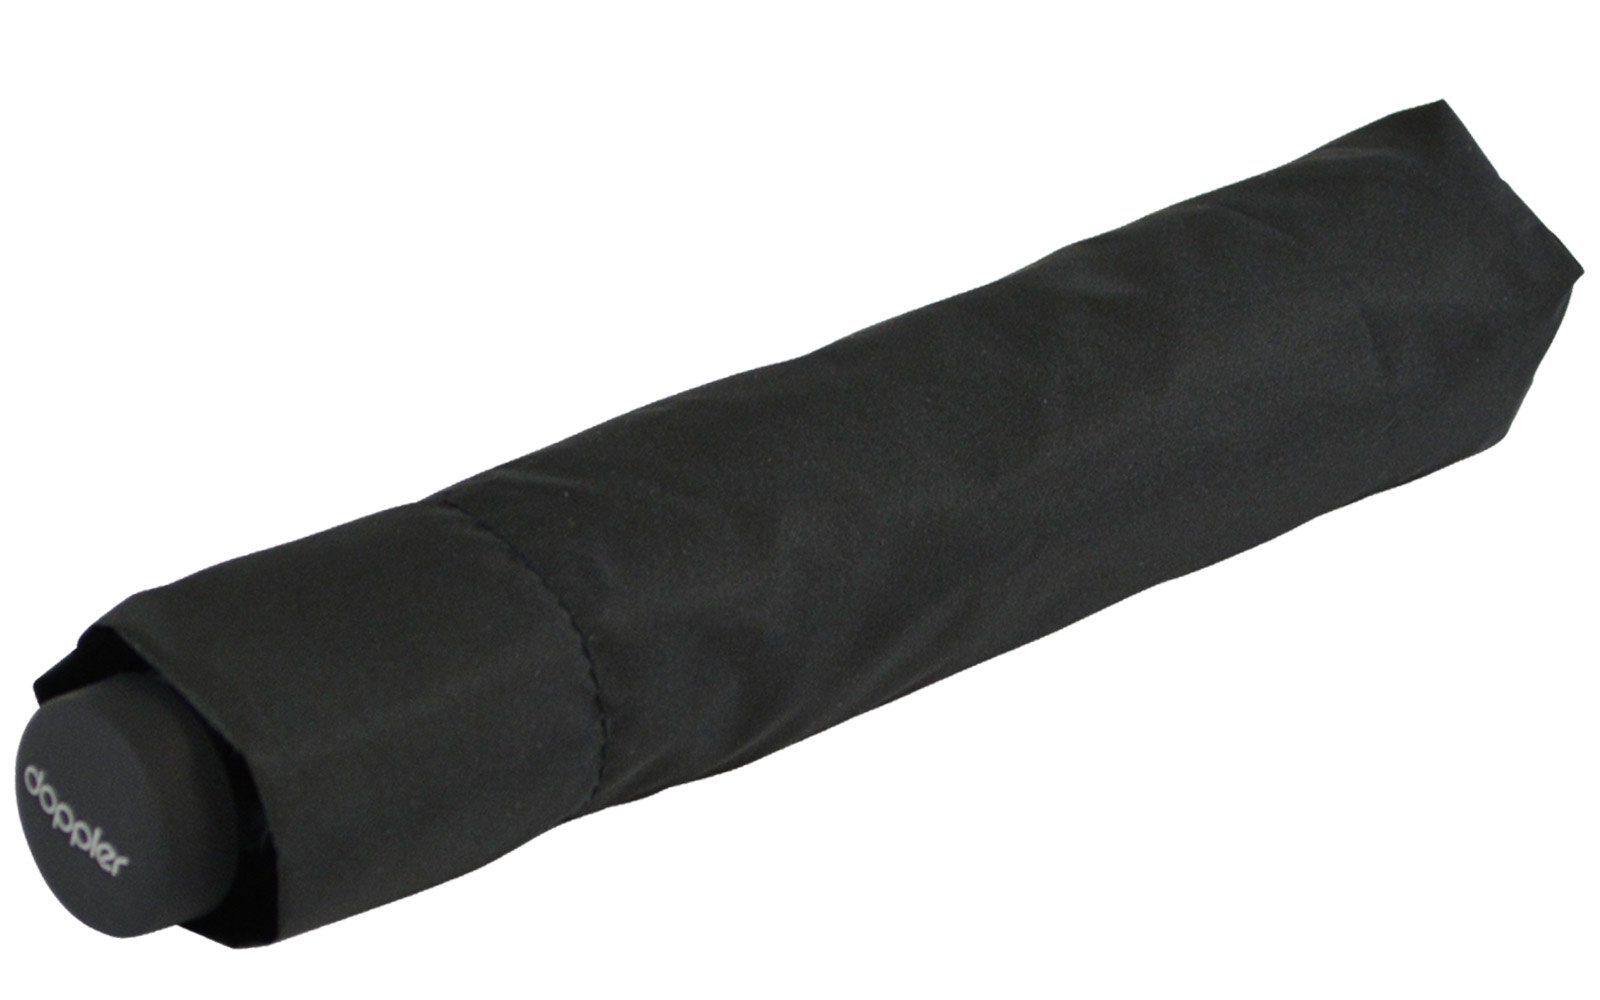 Black Taschenregenschirm Uni Large, doppler® Zero Simply